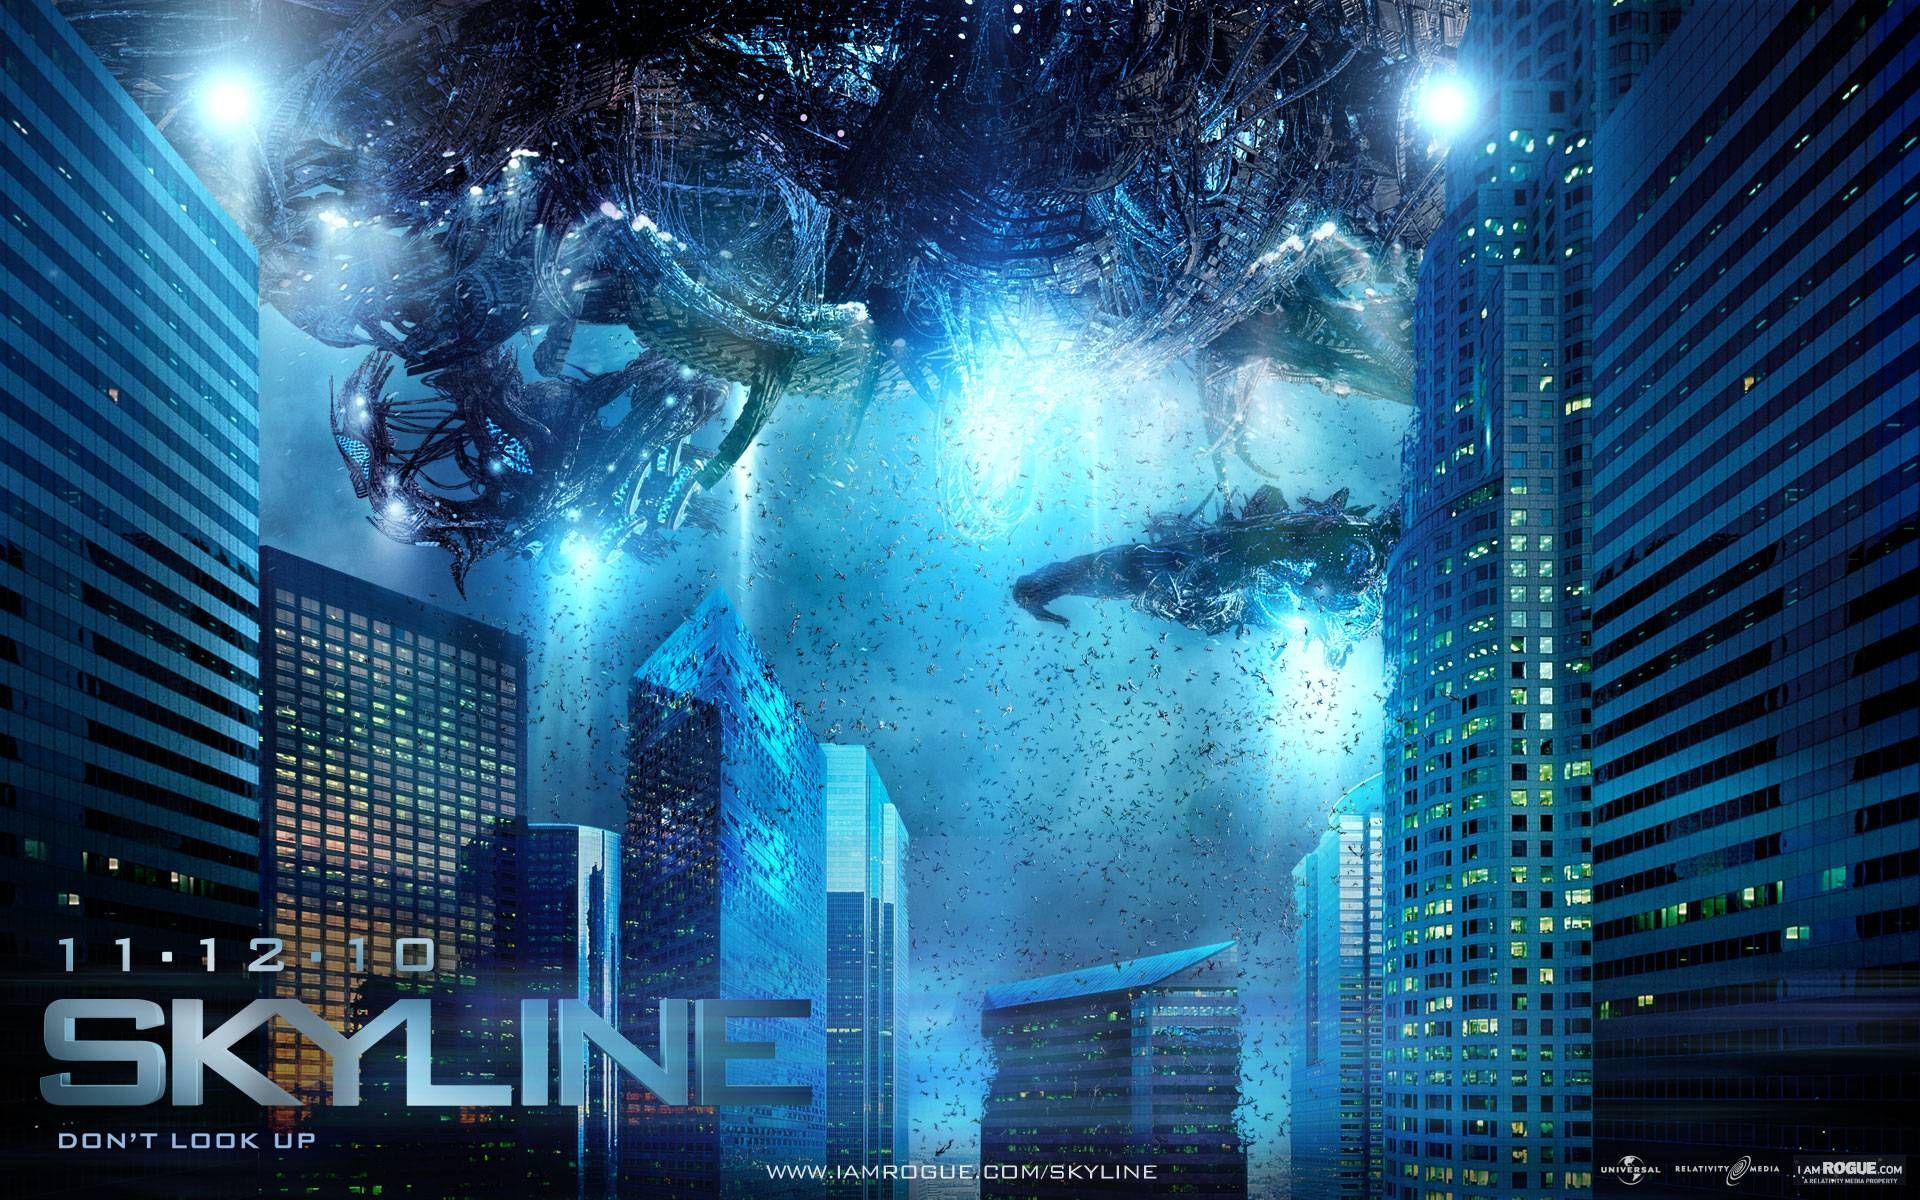 alien invasion movies 2010s